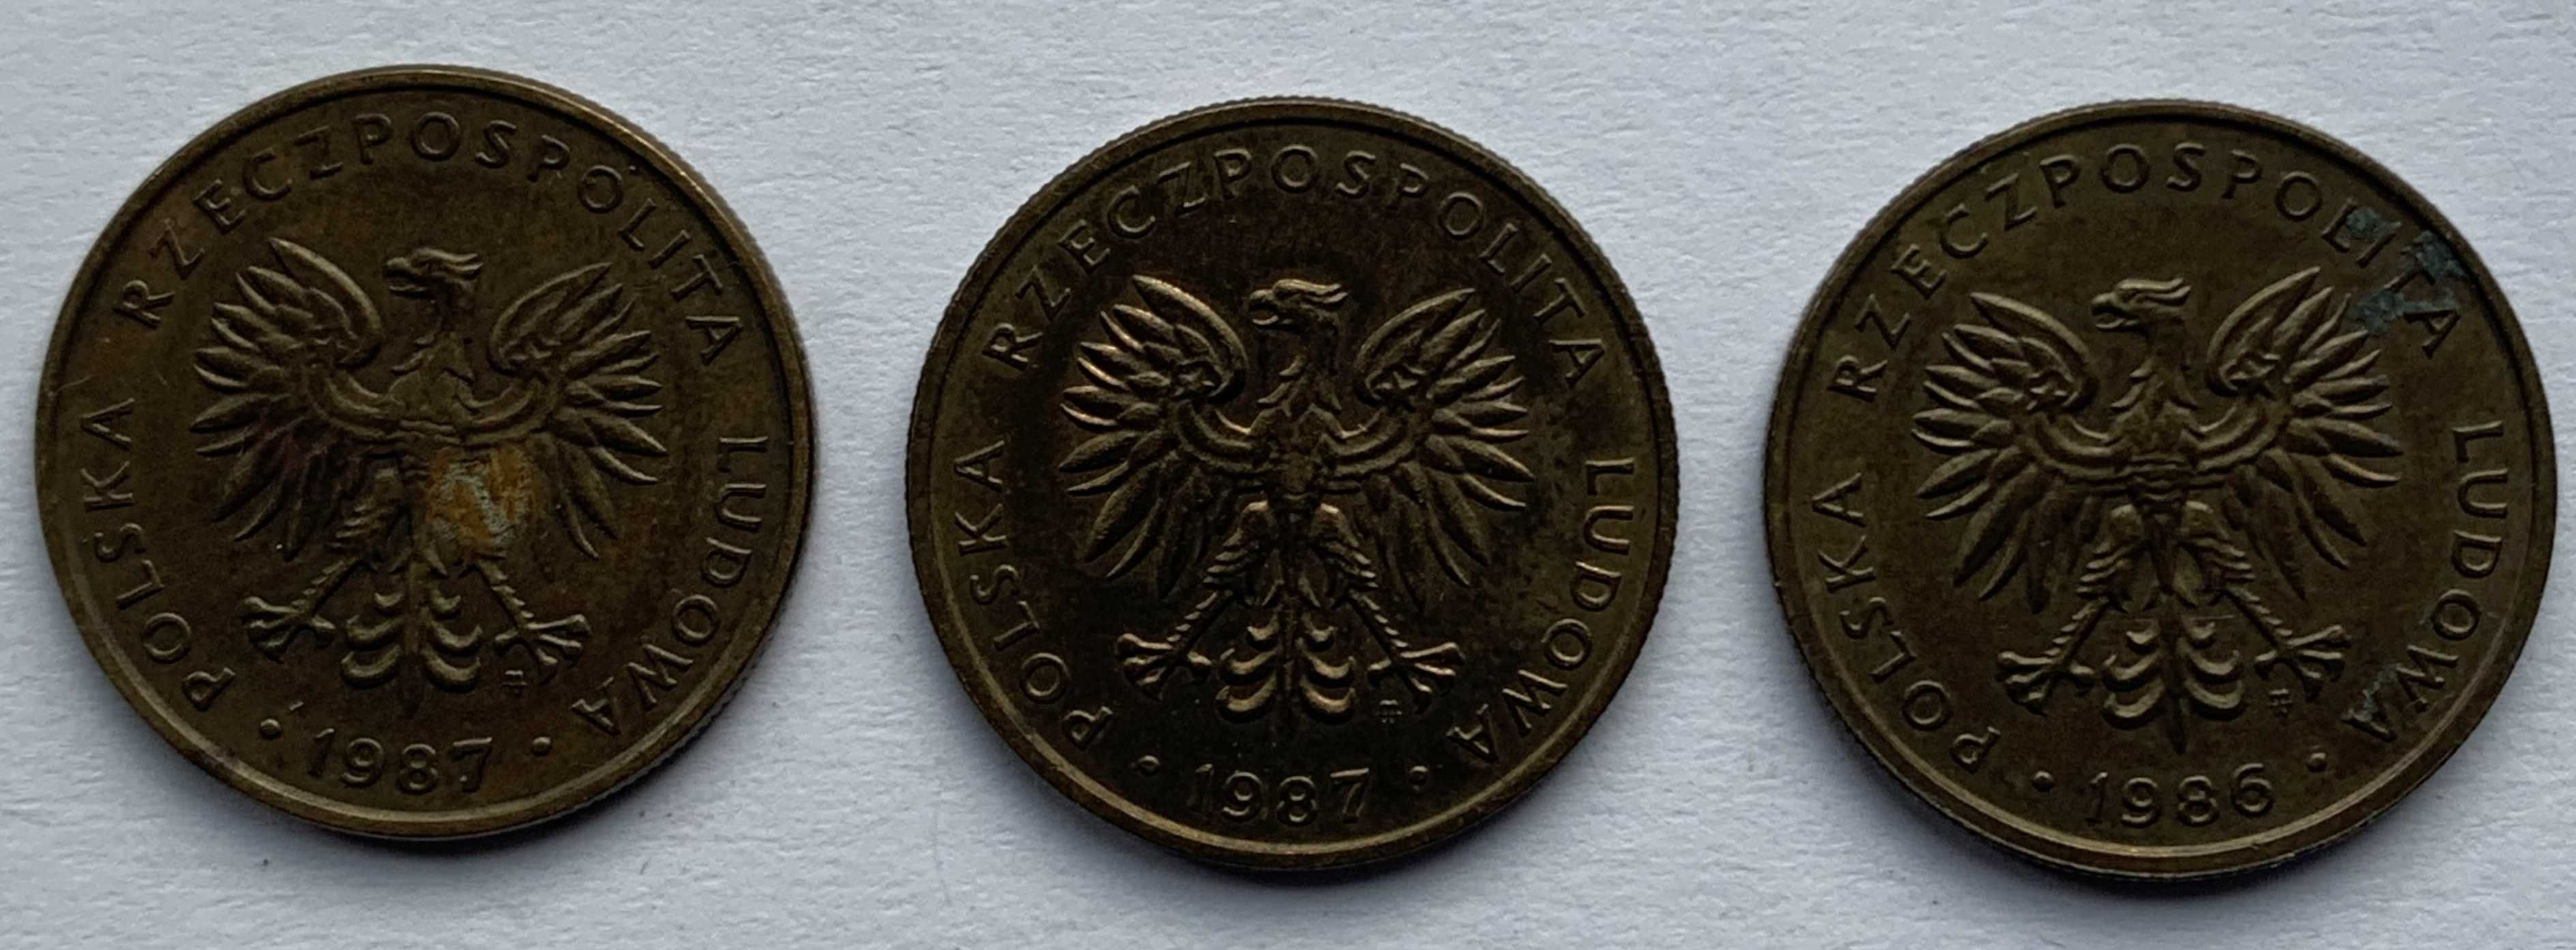 Moneta 5zl z roku 87 i 86